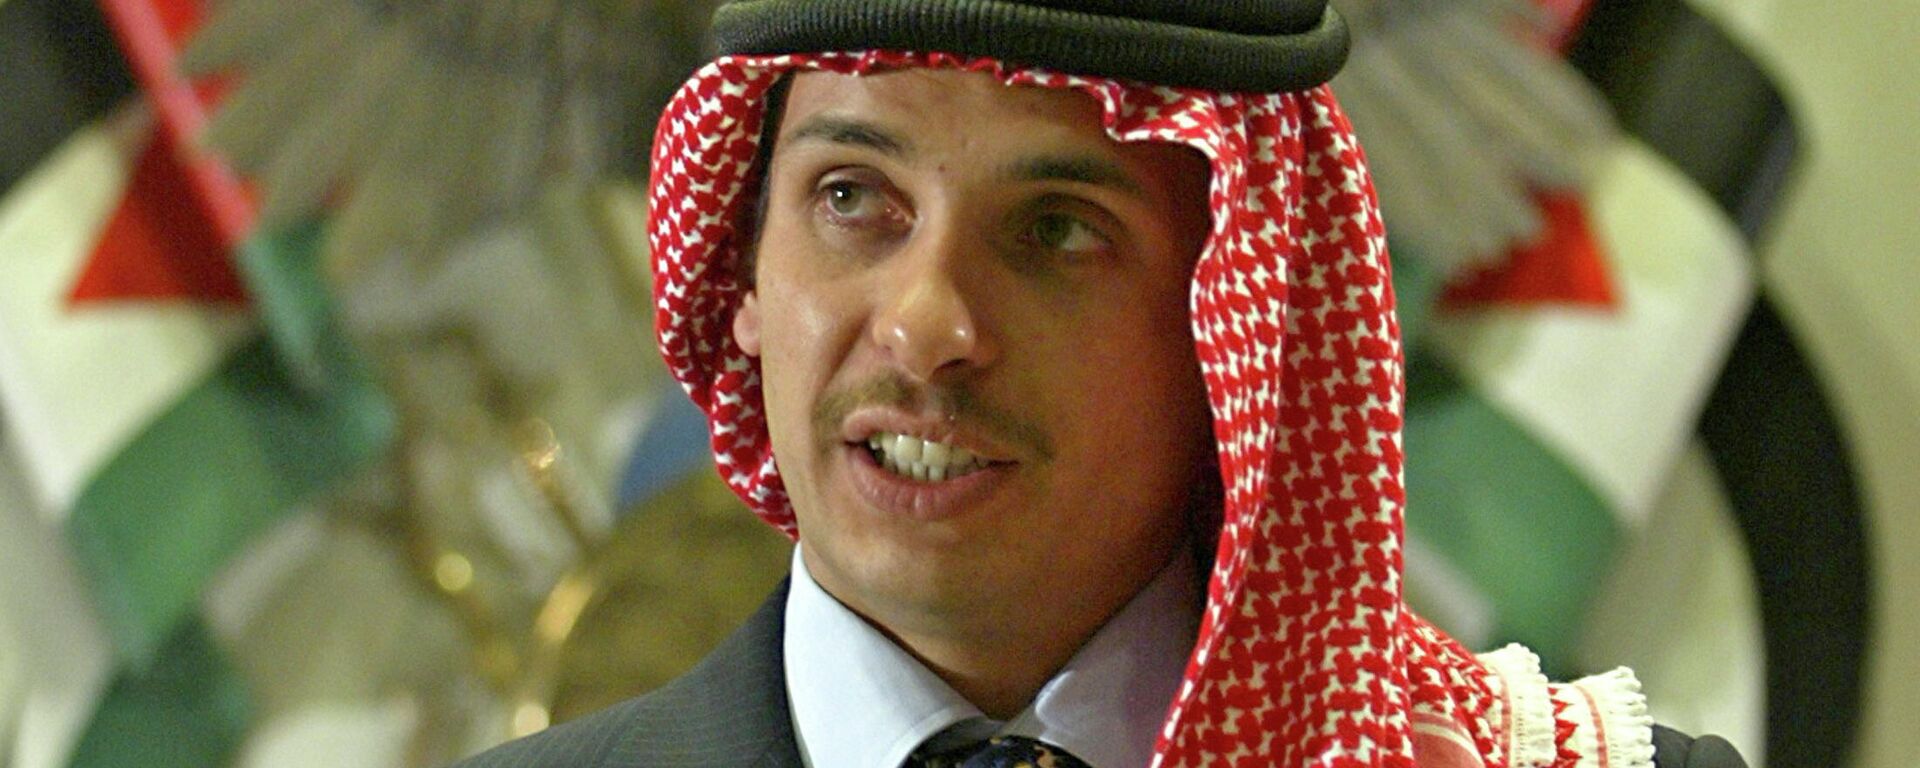 Hamza bin al Hussein, antiguo príncipe heredero de Jordania - Sputnik Mundo, 1920, 03.04.2021